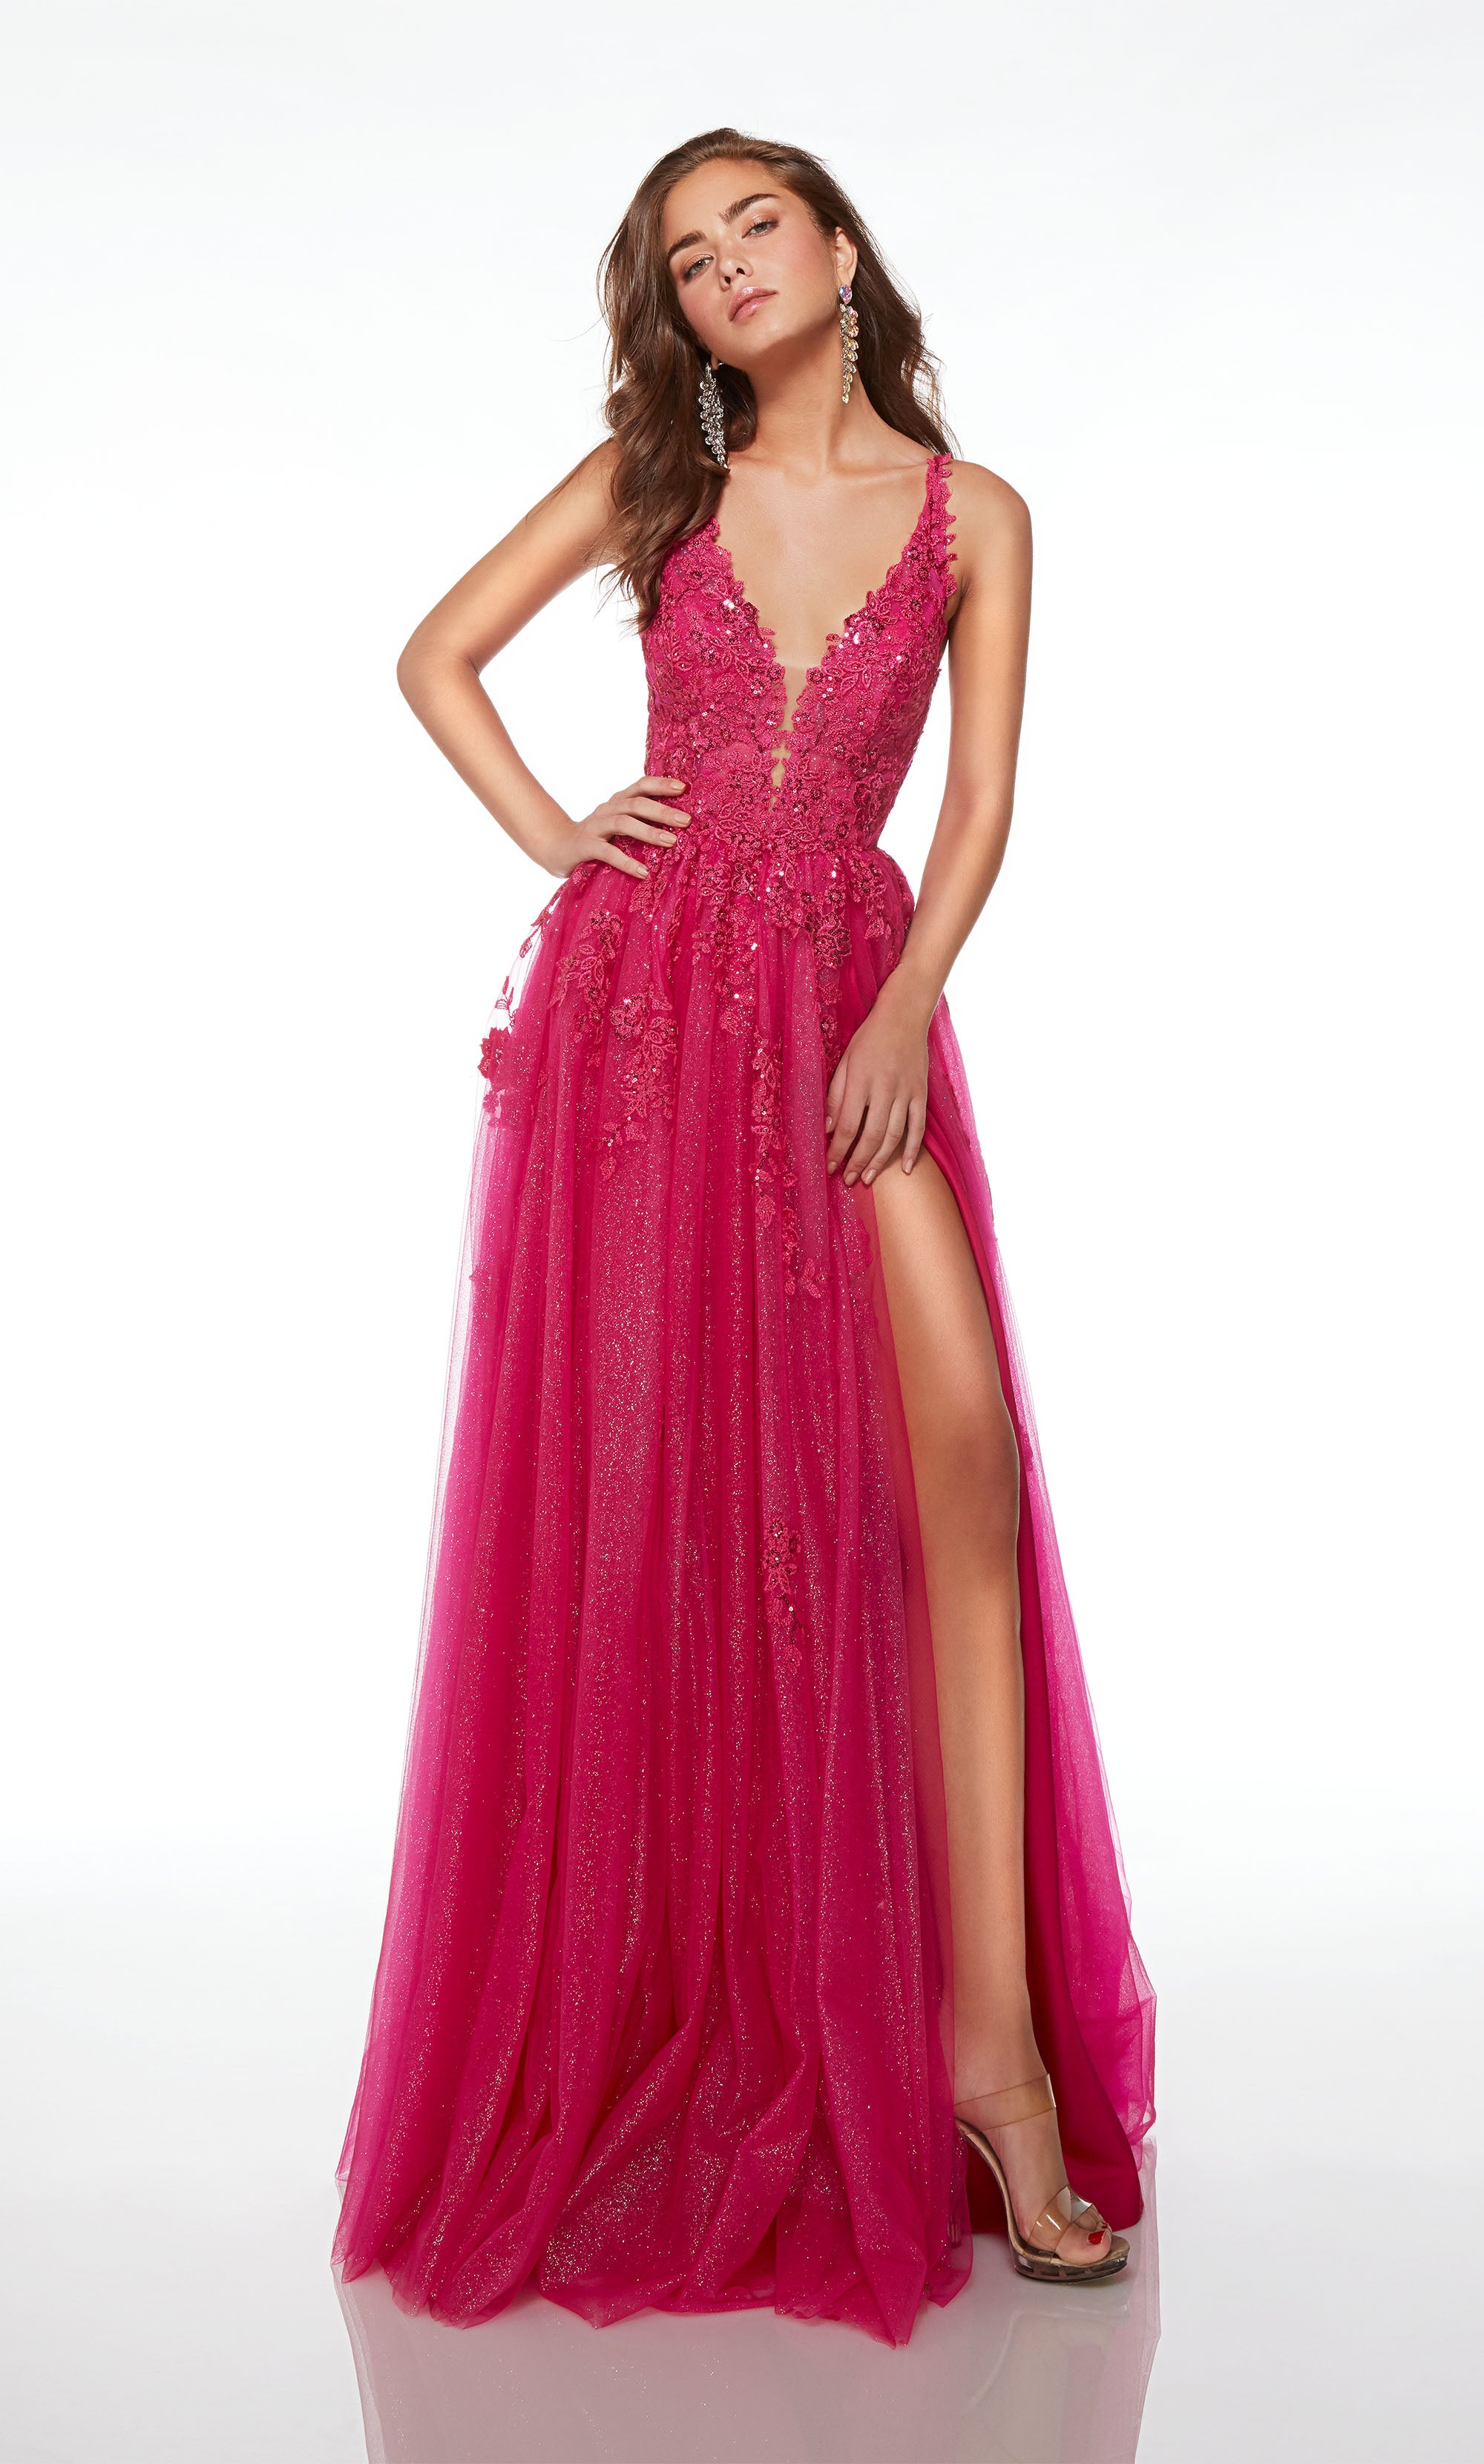 Viniodress Blush Pink Lace Applique Prom Dresses with Slit Spaghetti Strap Evening Dress FD3206 Custom Colors / US20W